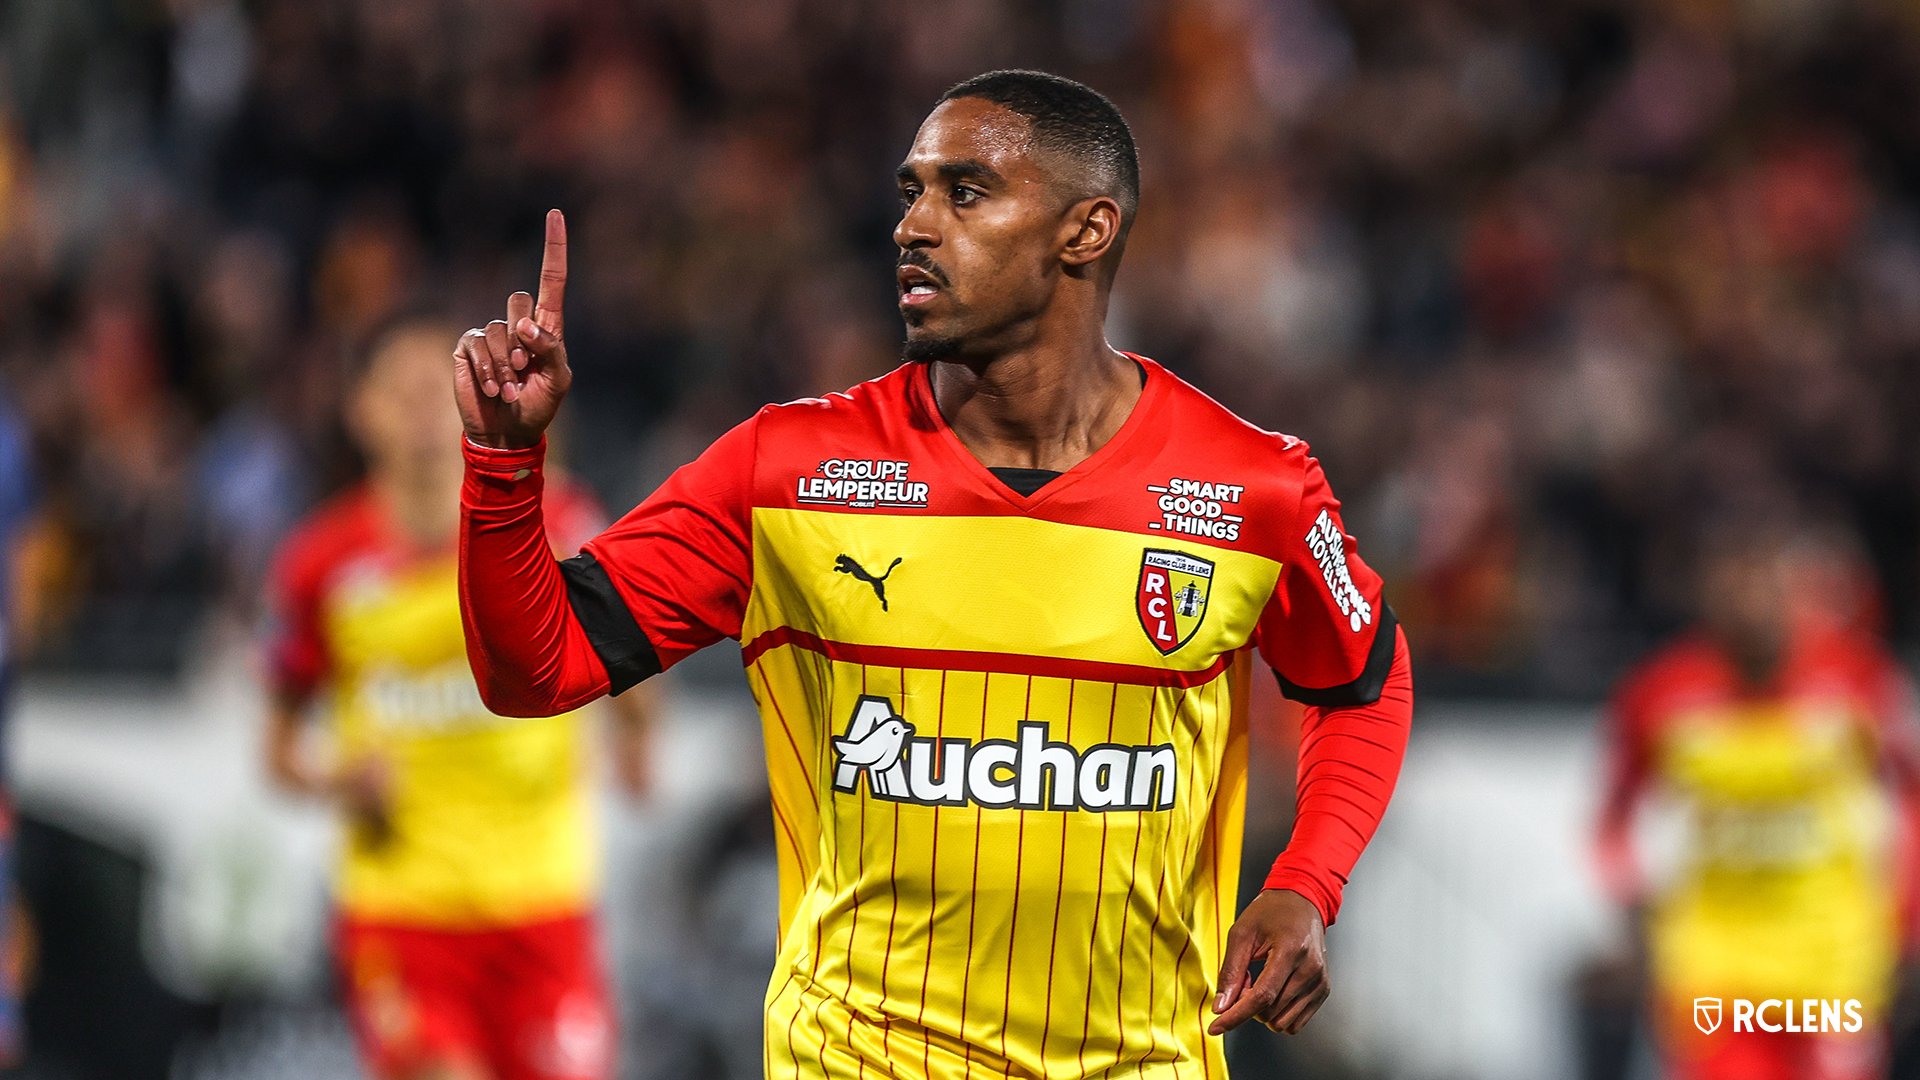 Wesley Saïd, Ligue 1 | Wesley Saïd délivre Lens face à Montpellier, Comoros Football 269 | Portail du football des Comores